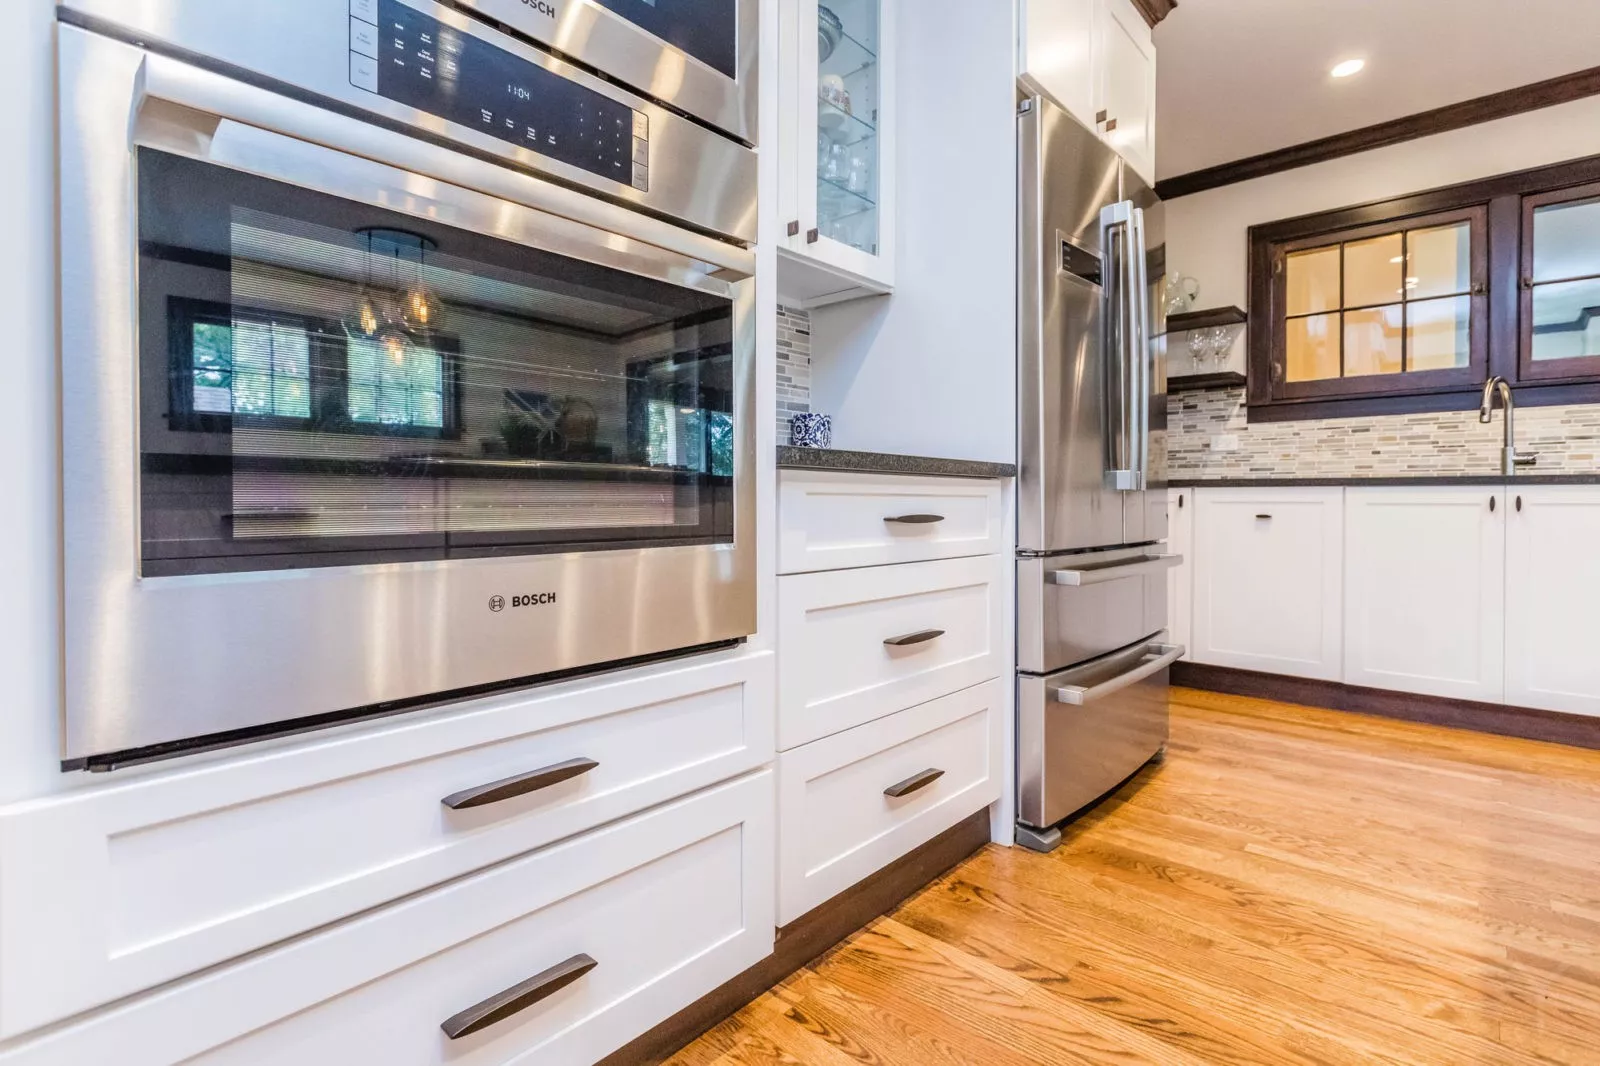 livco kitchen remodel white cabinets stainless steel appliances hardwood flooring